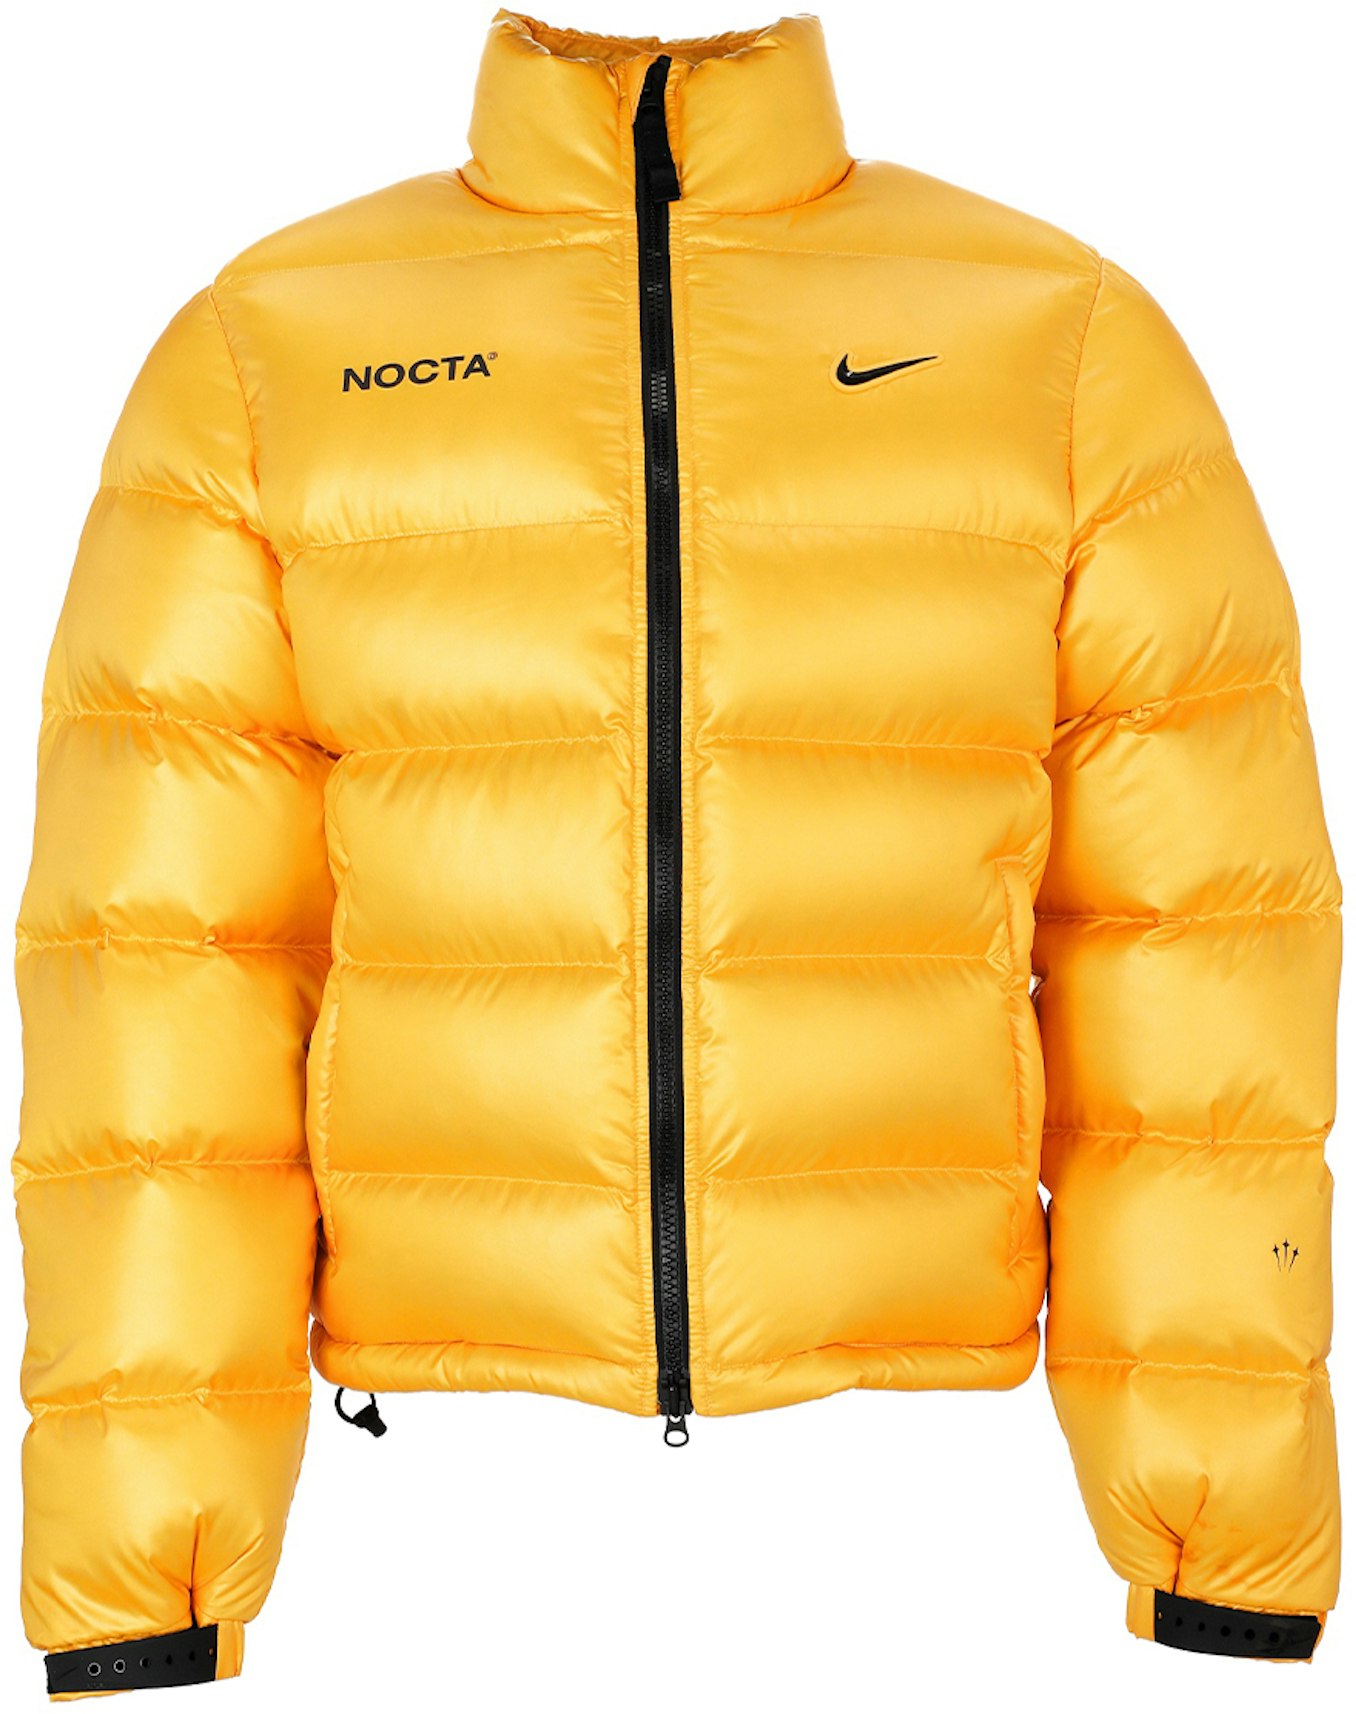 Idear ranura Egomanía Nike x Drake NOCTA Sunset Puffer Jacket Yellow - FW20 Men's - US